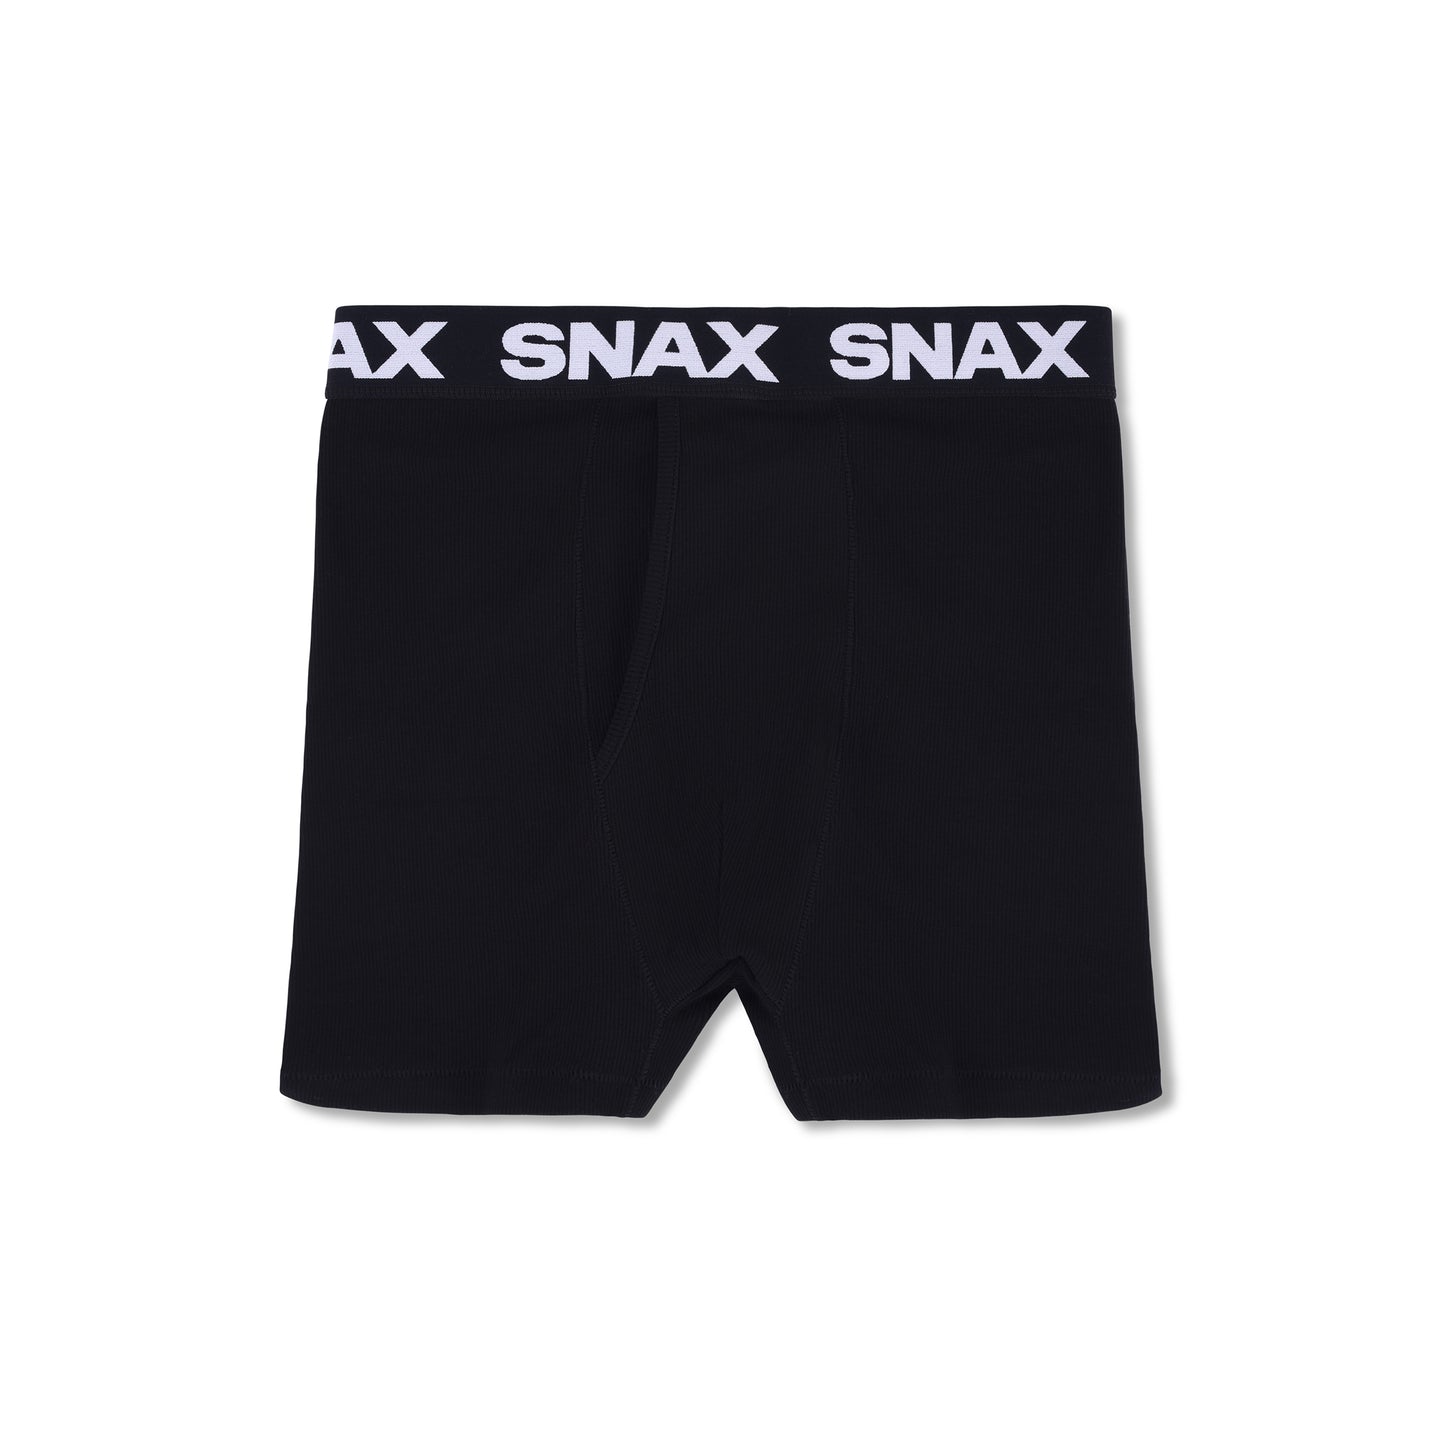 SNAX BOXERS